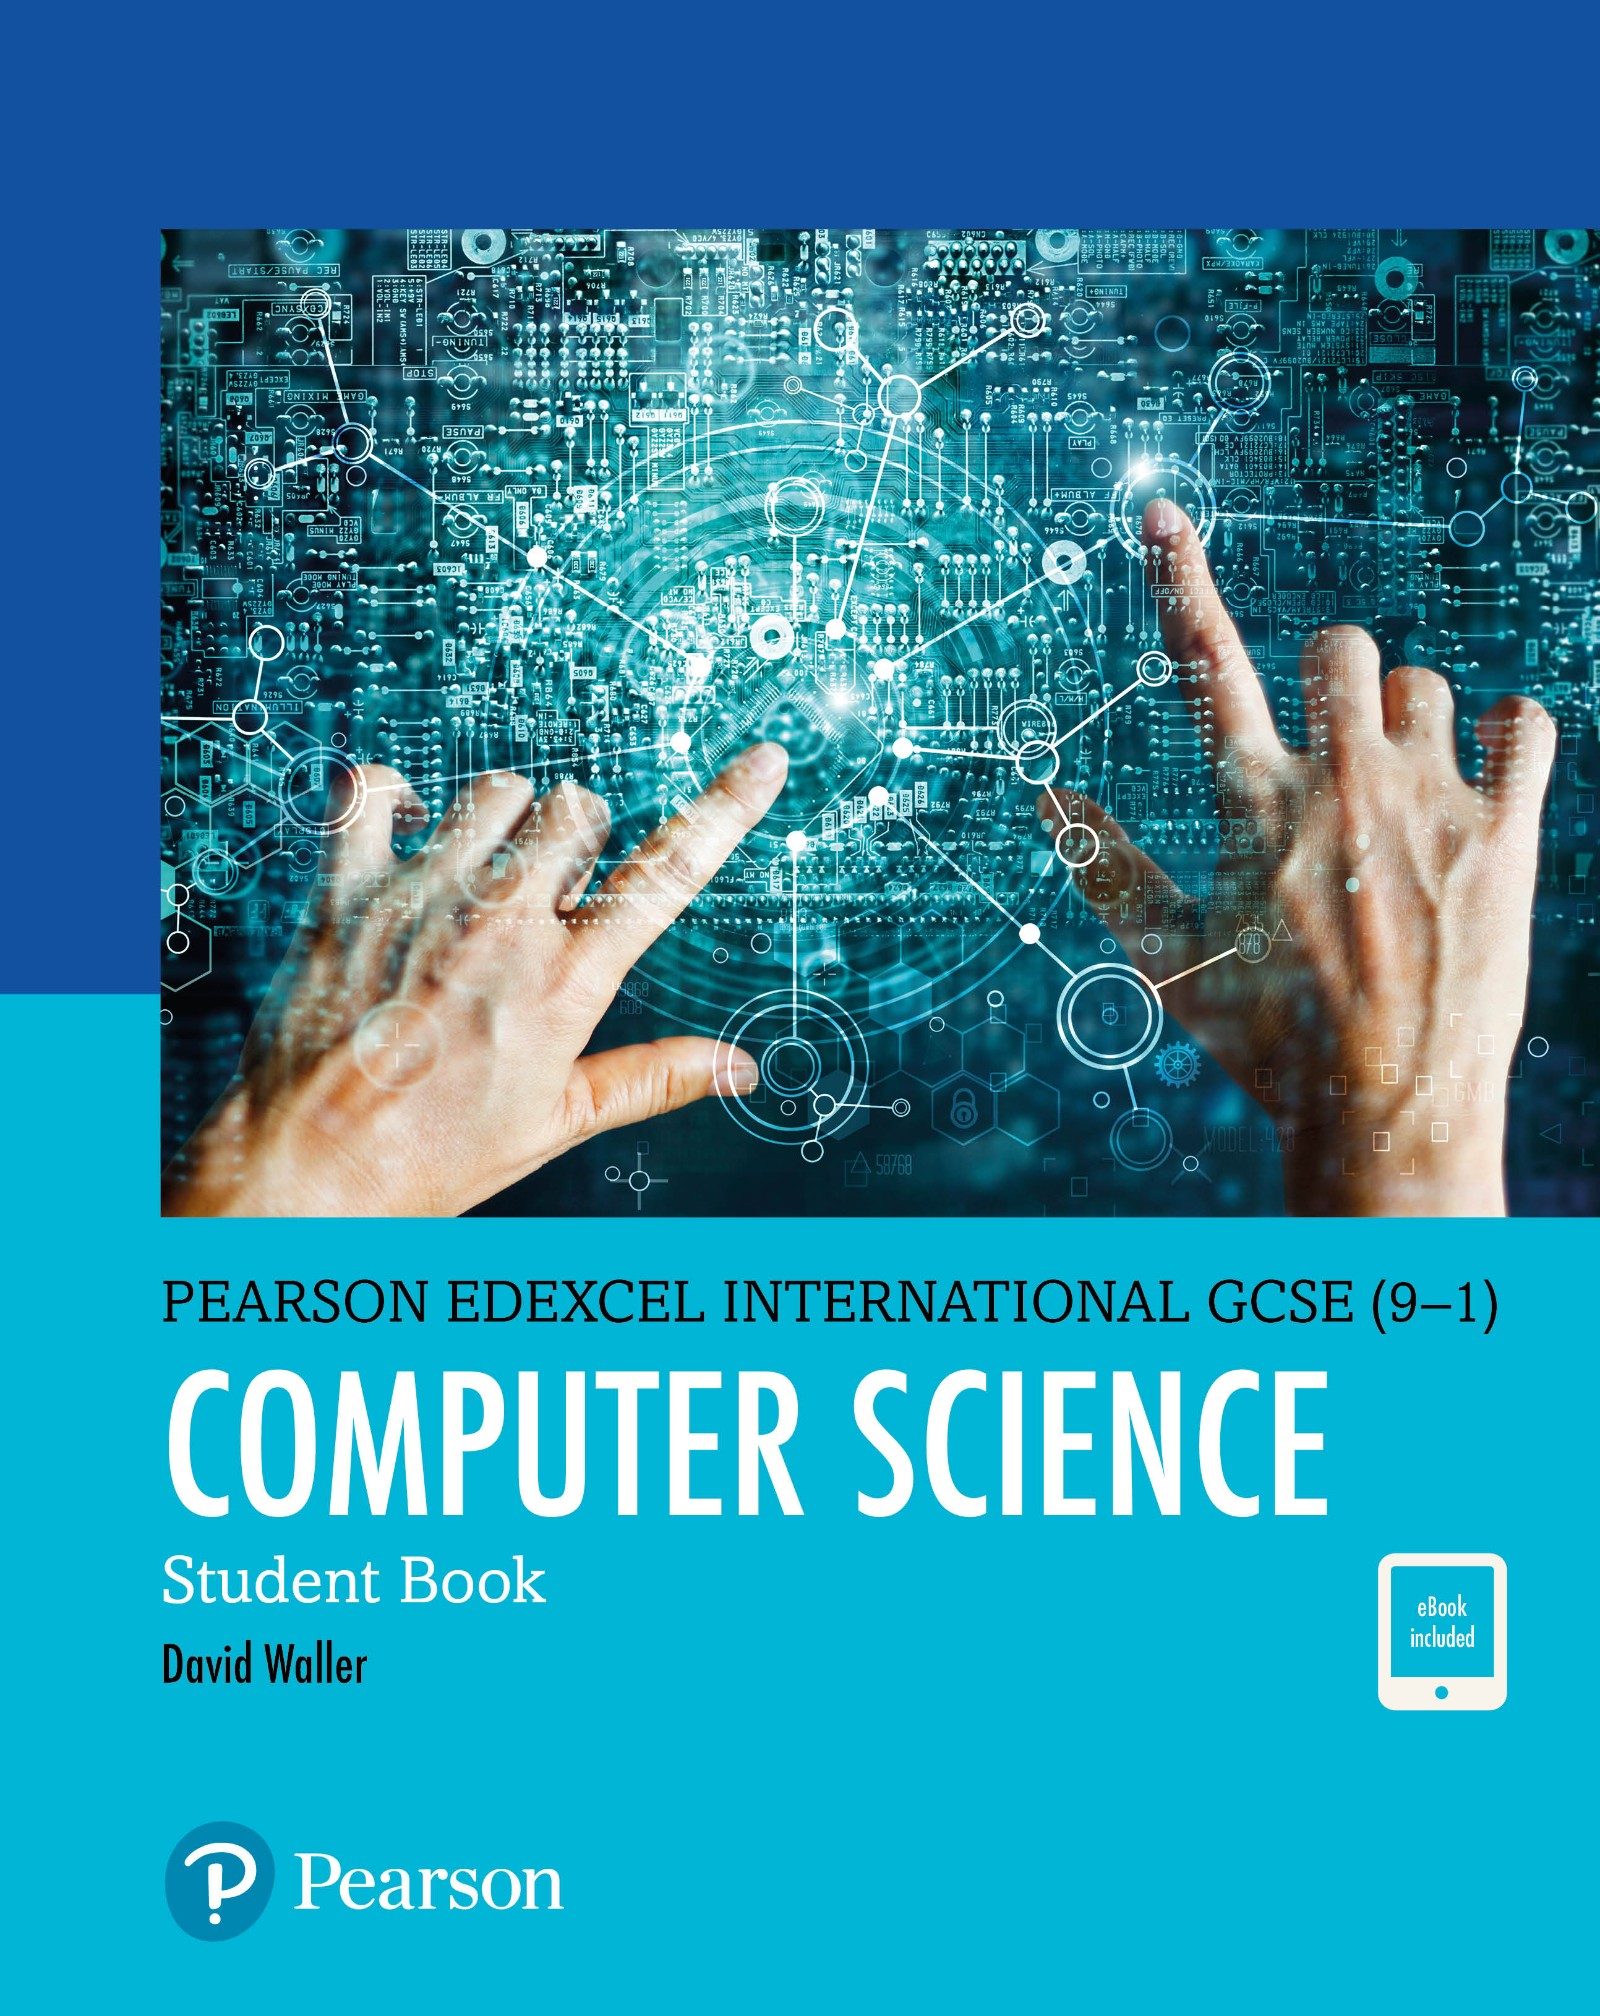 International GCSE Computer Science book